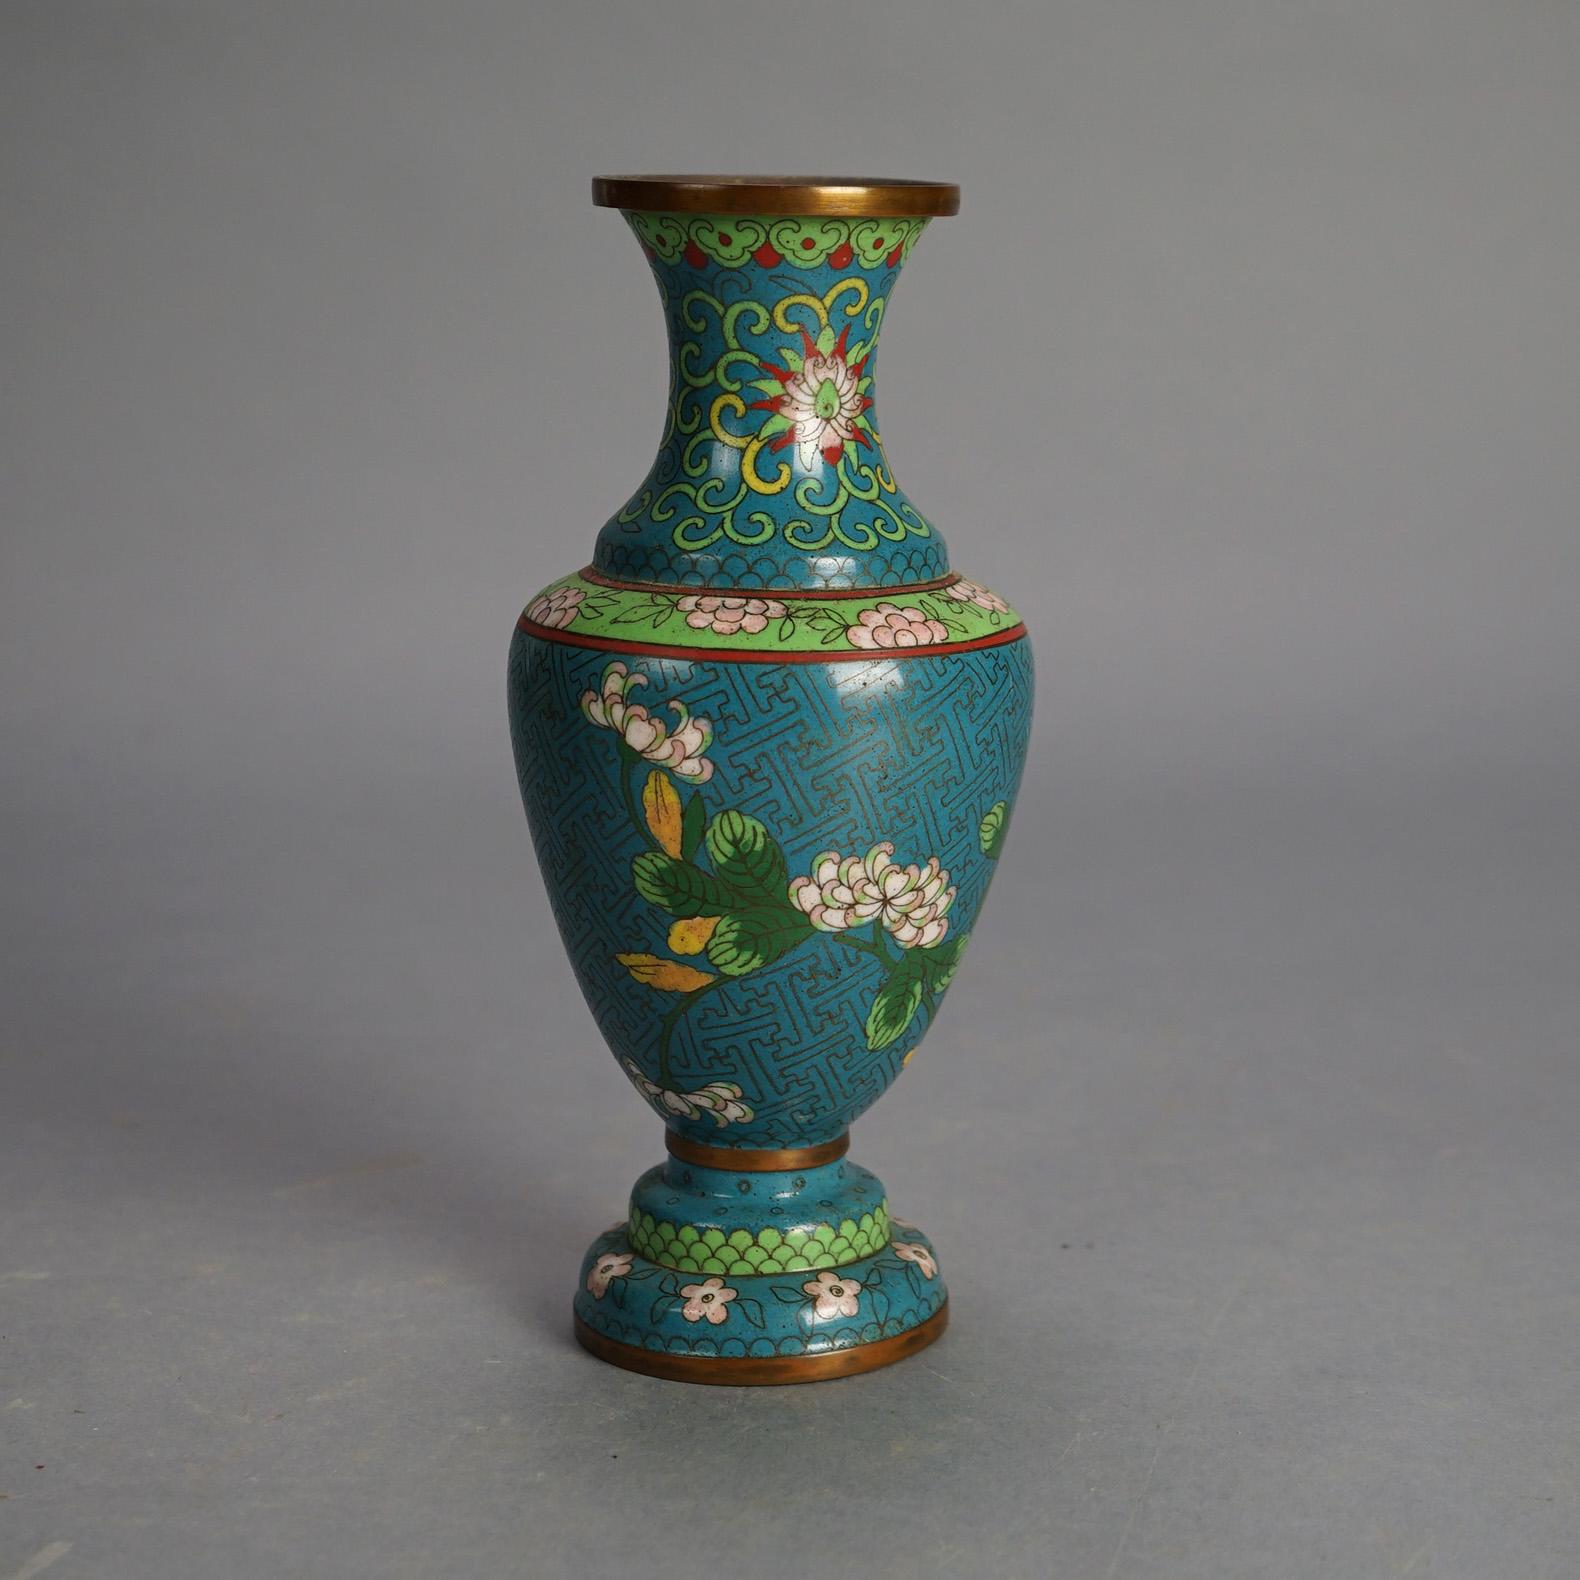 Four Antique Chinese Cloisonne Enameled Vases C1920

Measures - 9